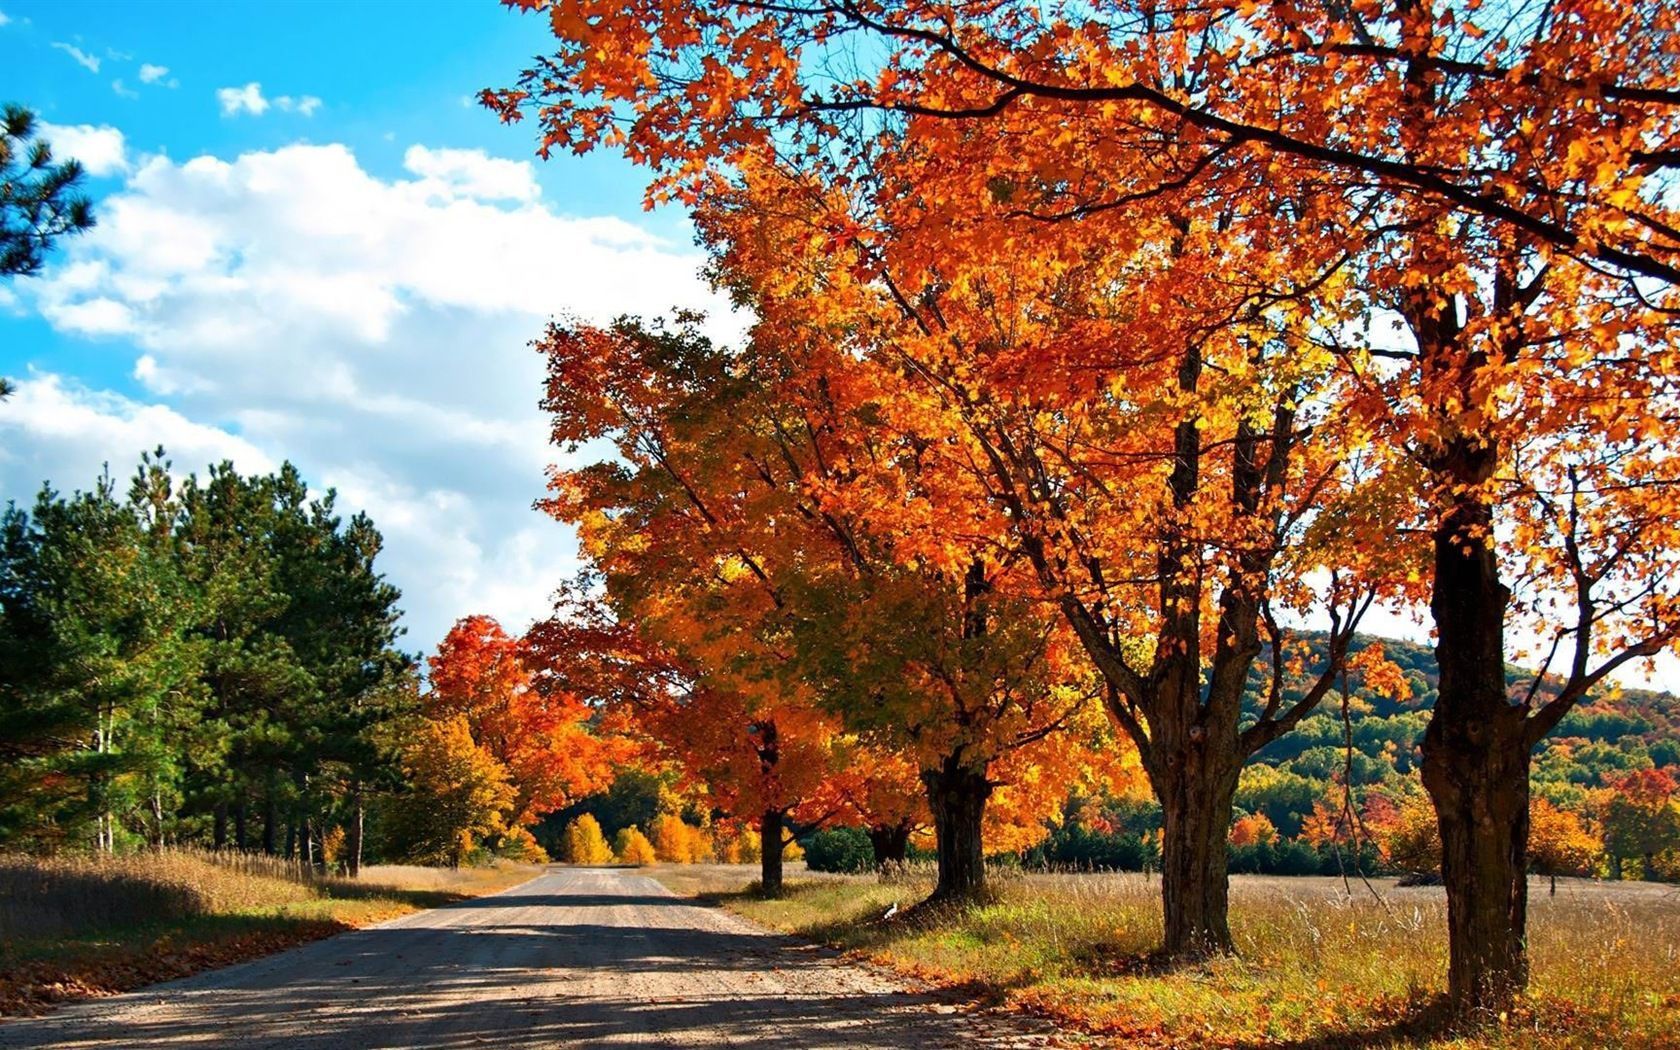 Windows 8.1 Theme HD wallpaper: beautiful autumn leaves Wallpaper Download 8.1 Theme HD wallpaper: beautiful autumn leaves Wallpaper Wallpaper Site